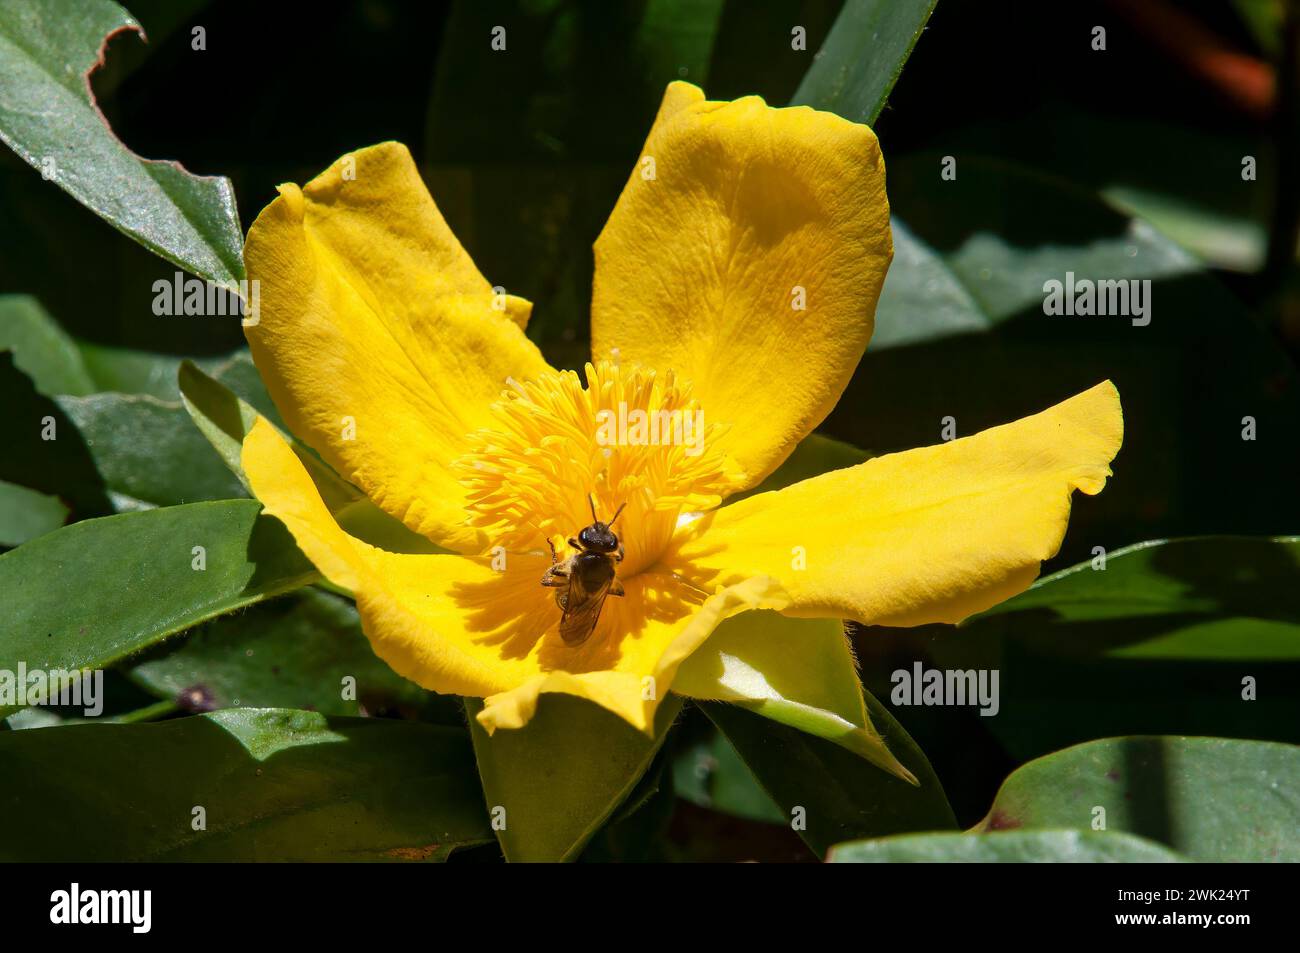 Sydney Australia, insect on bright yellow flower of hibbertia scandens or snake vine Stock Photo